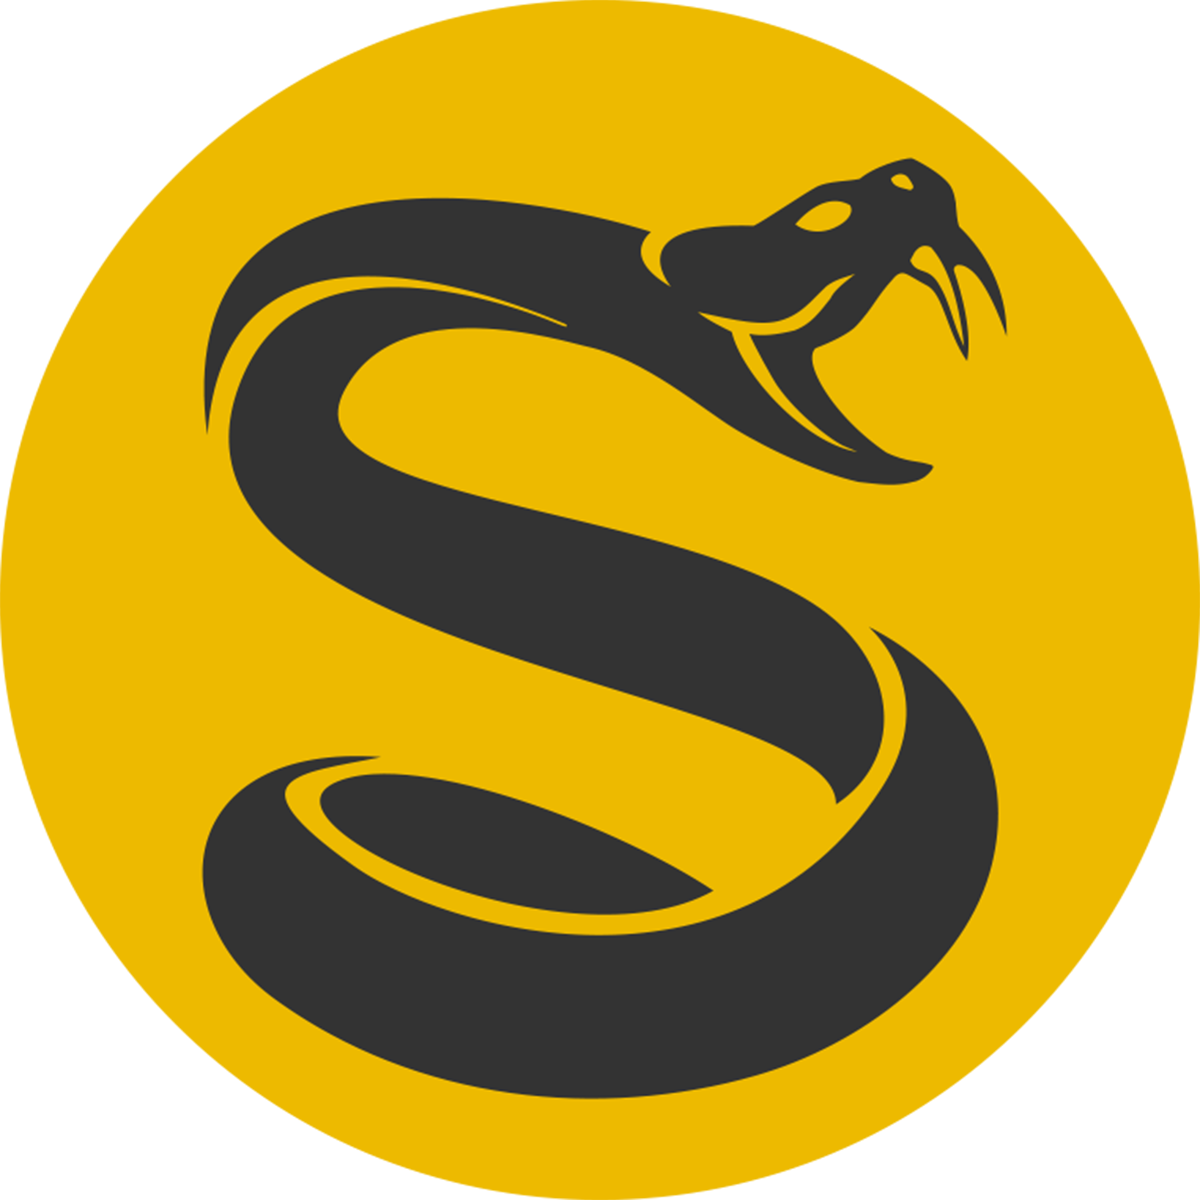 Snake x. Логотип змеи. Кобра логотип. Змея в форме буквы s. Змея символ.